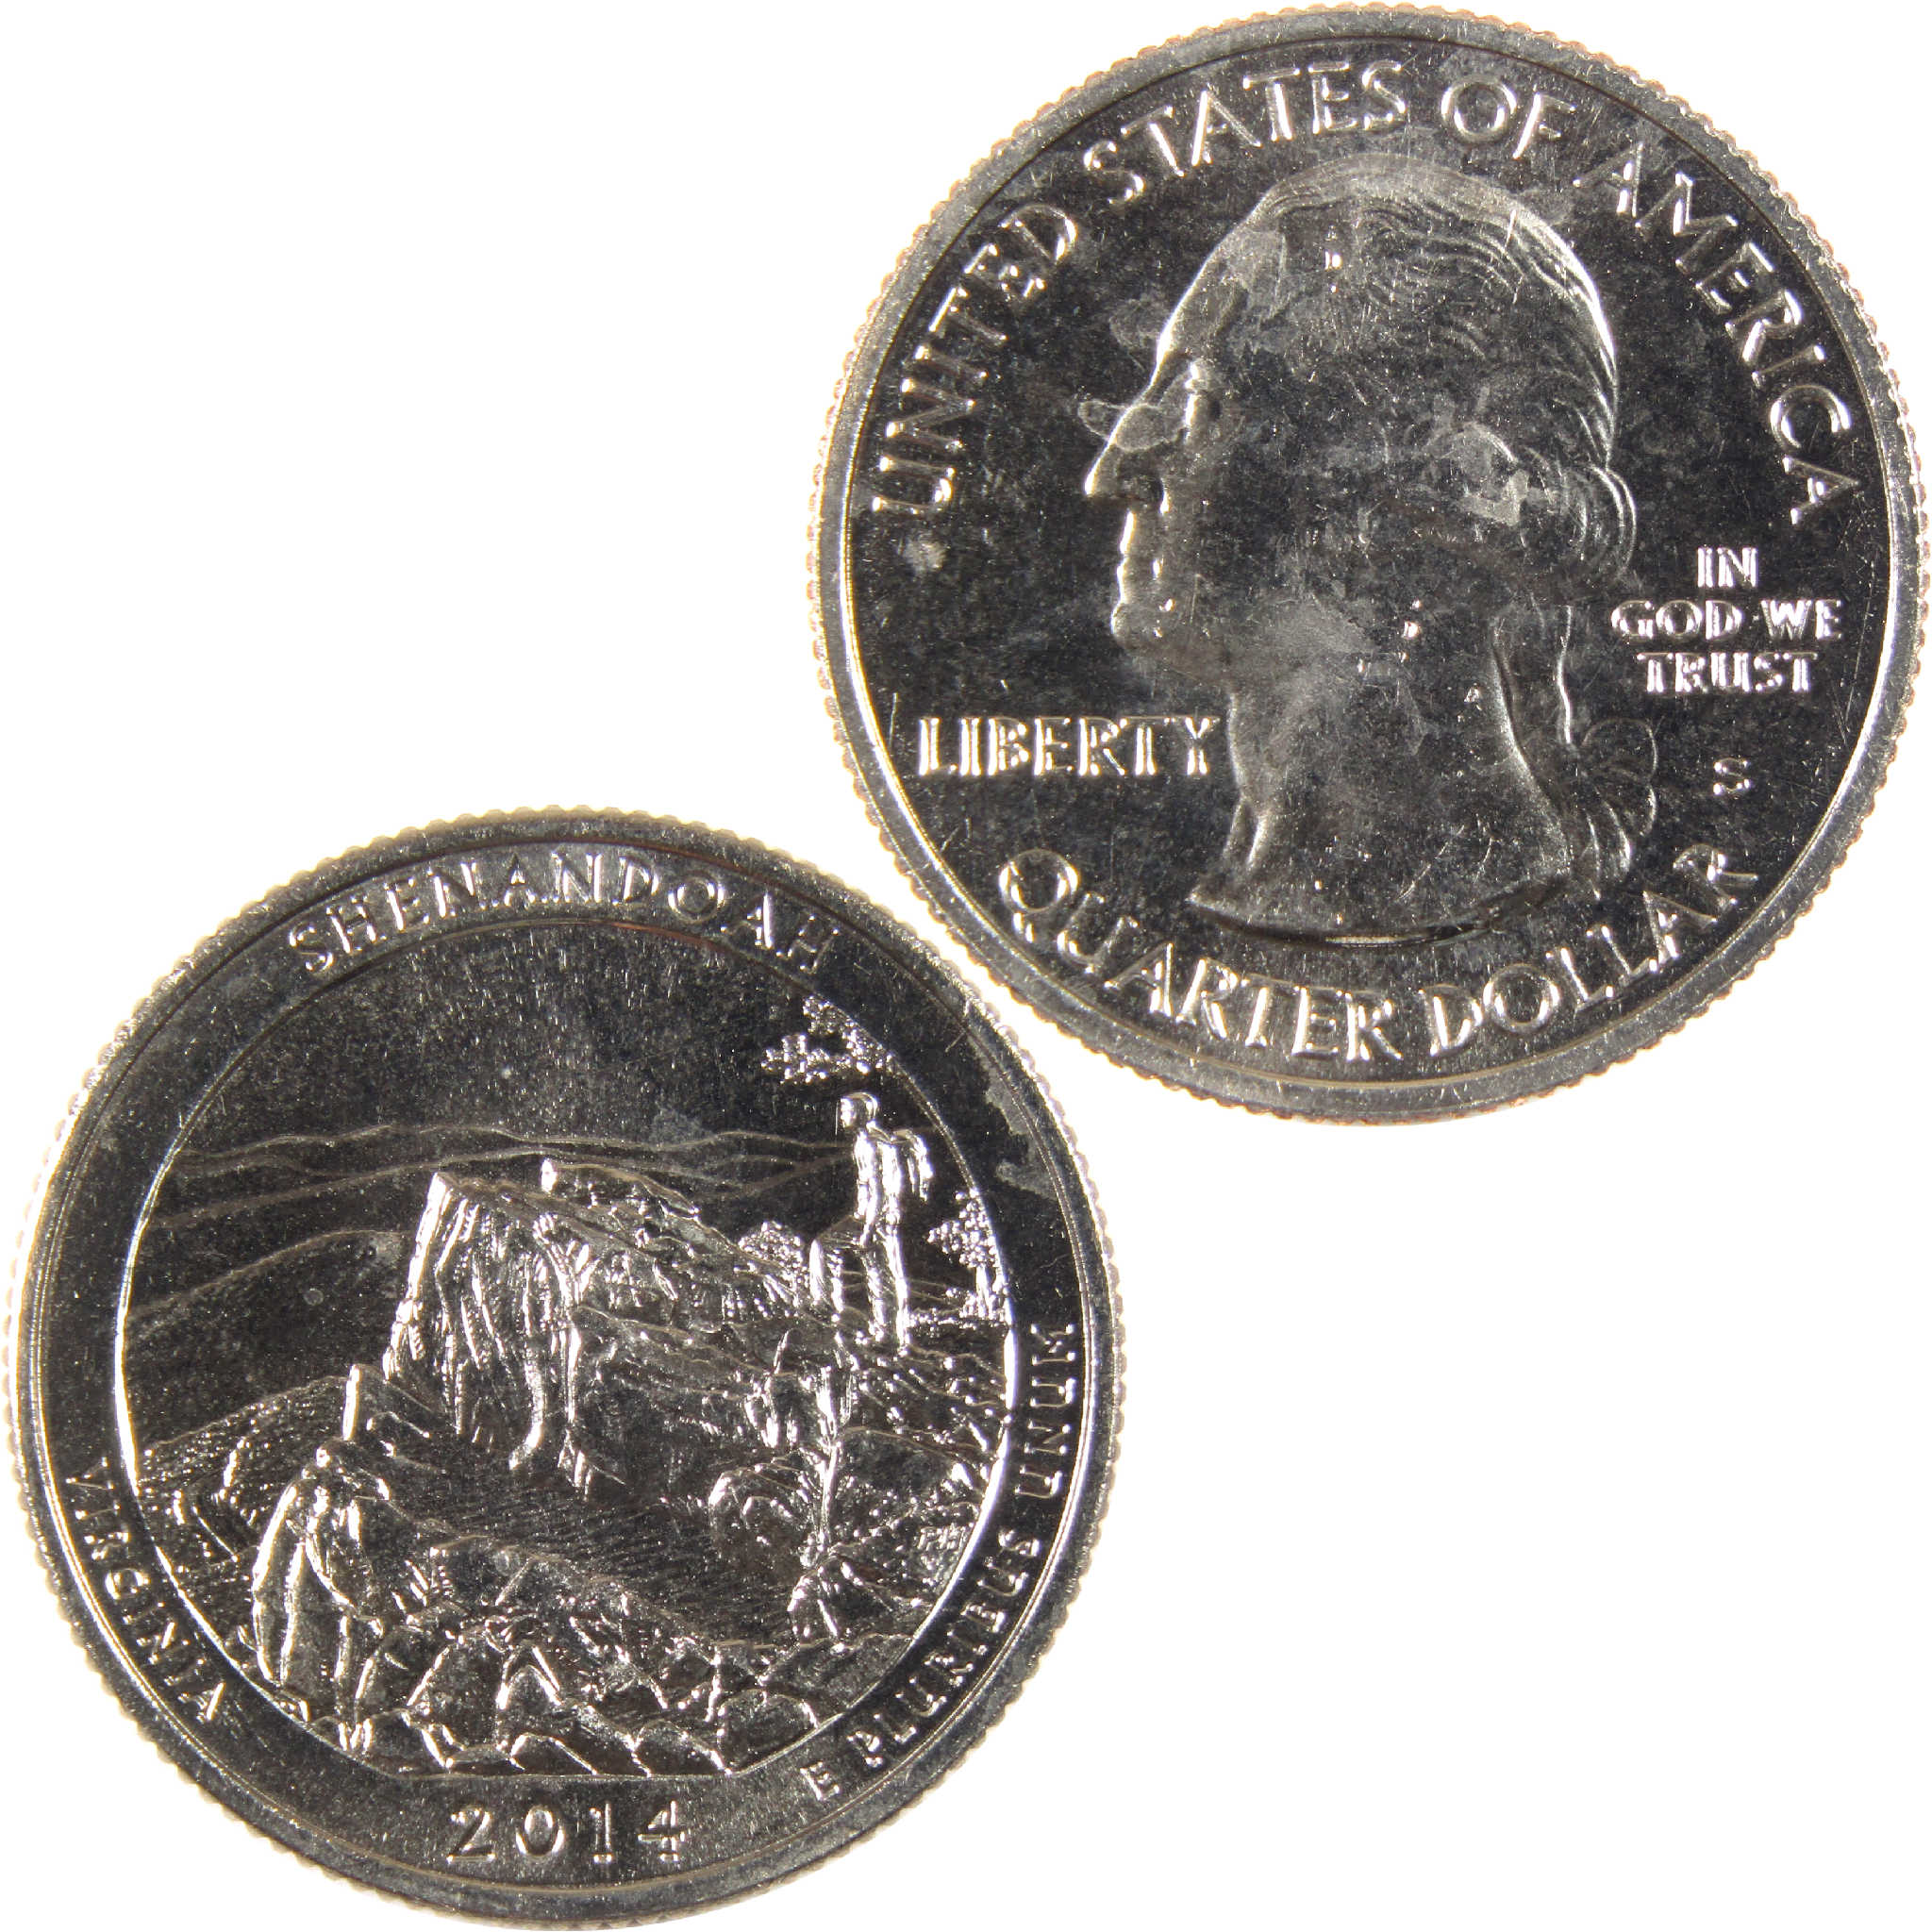 2014 S Shenandoah National Park Quarter Uncirculated Clad 25c Coin